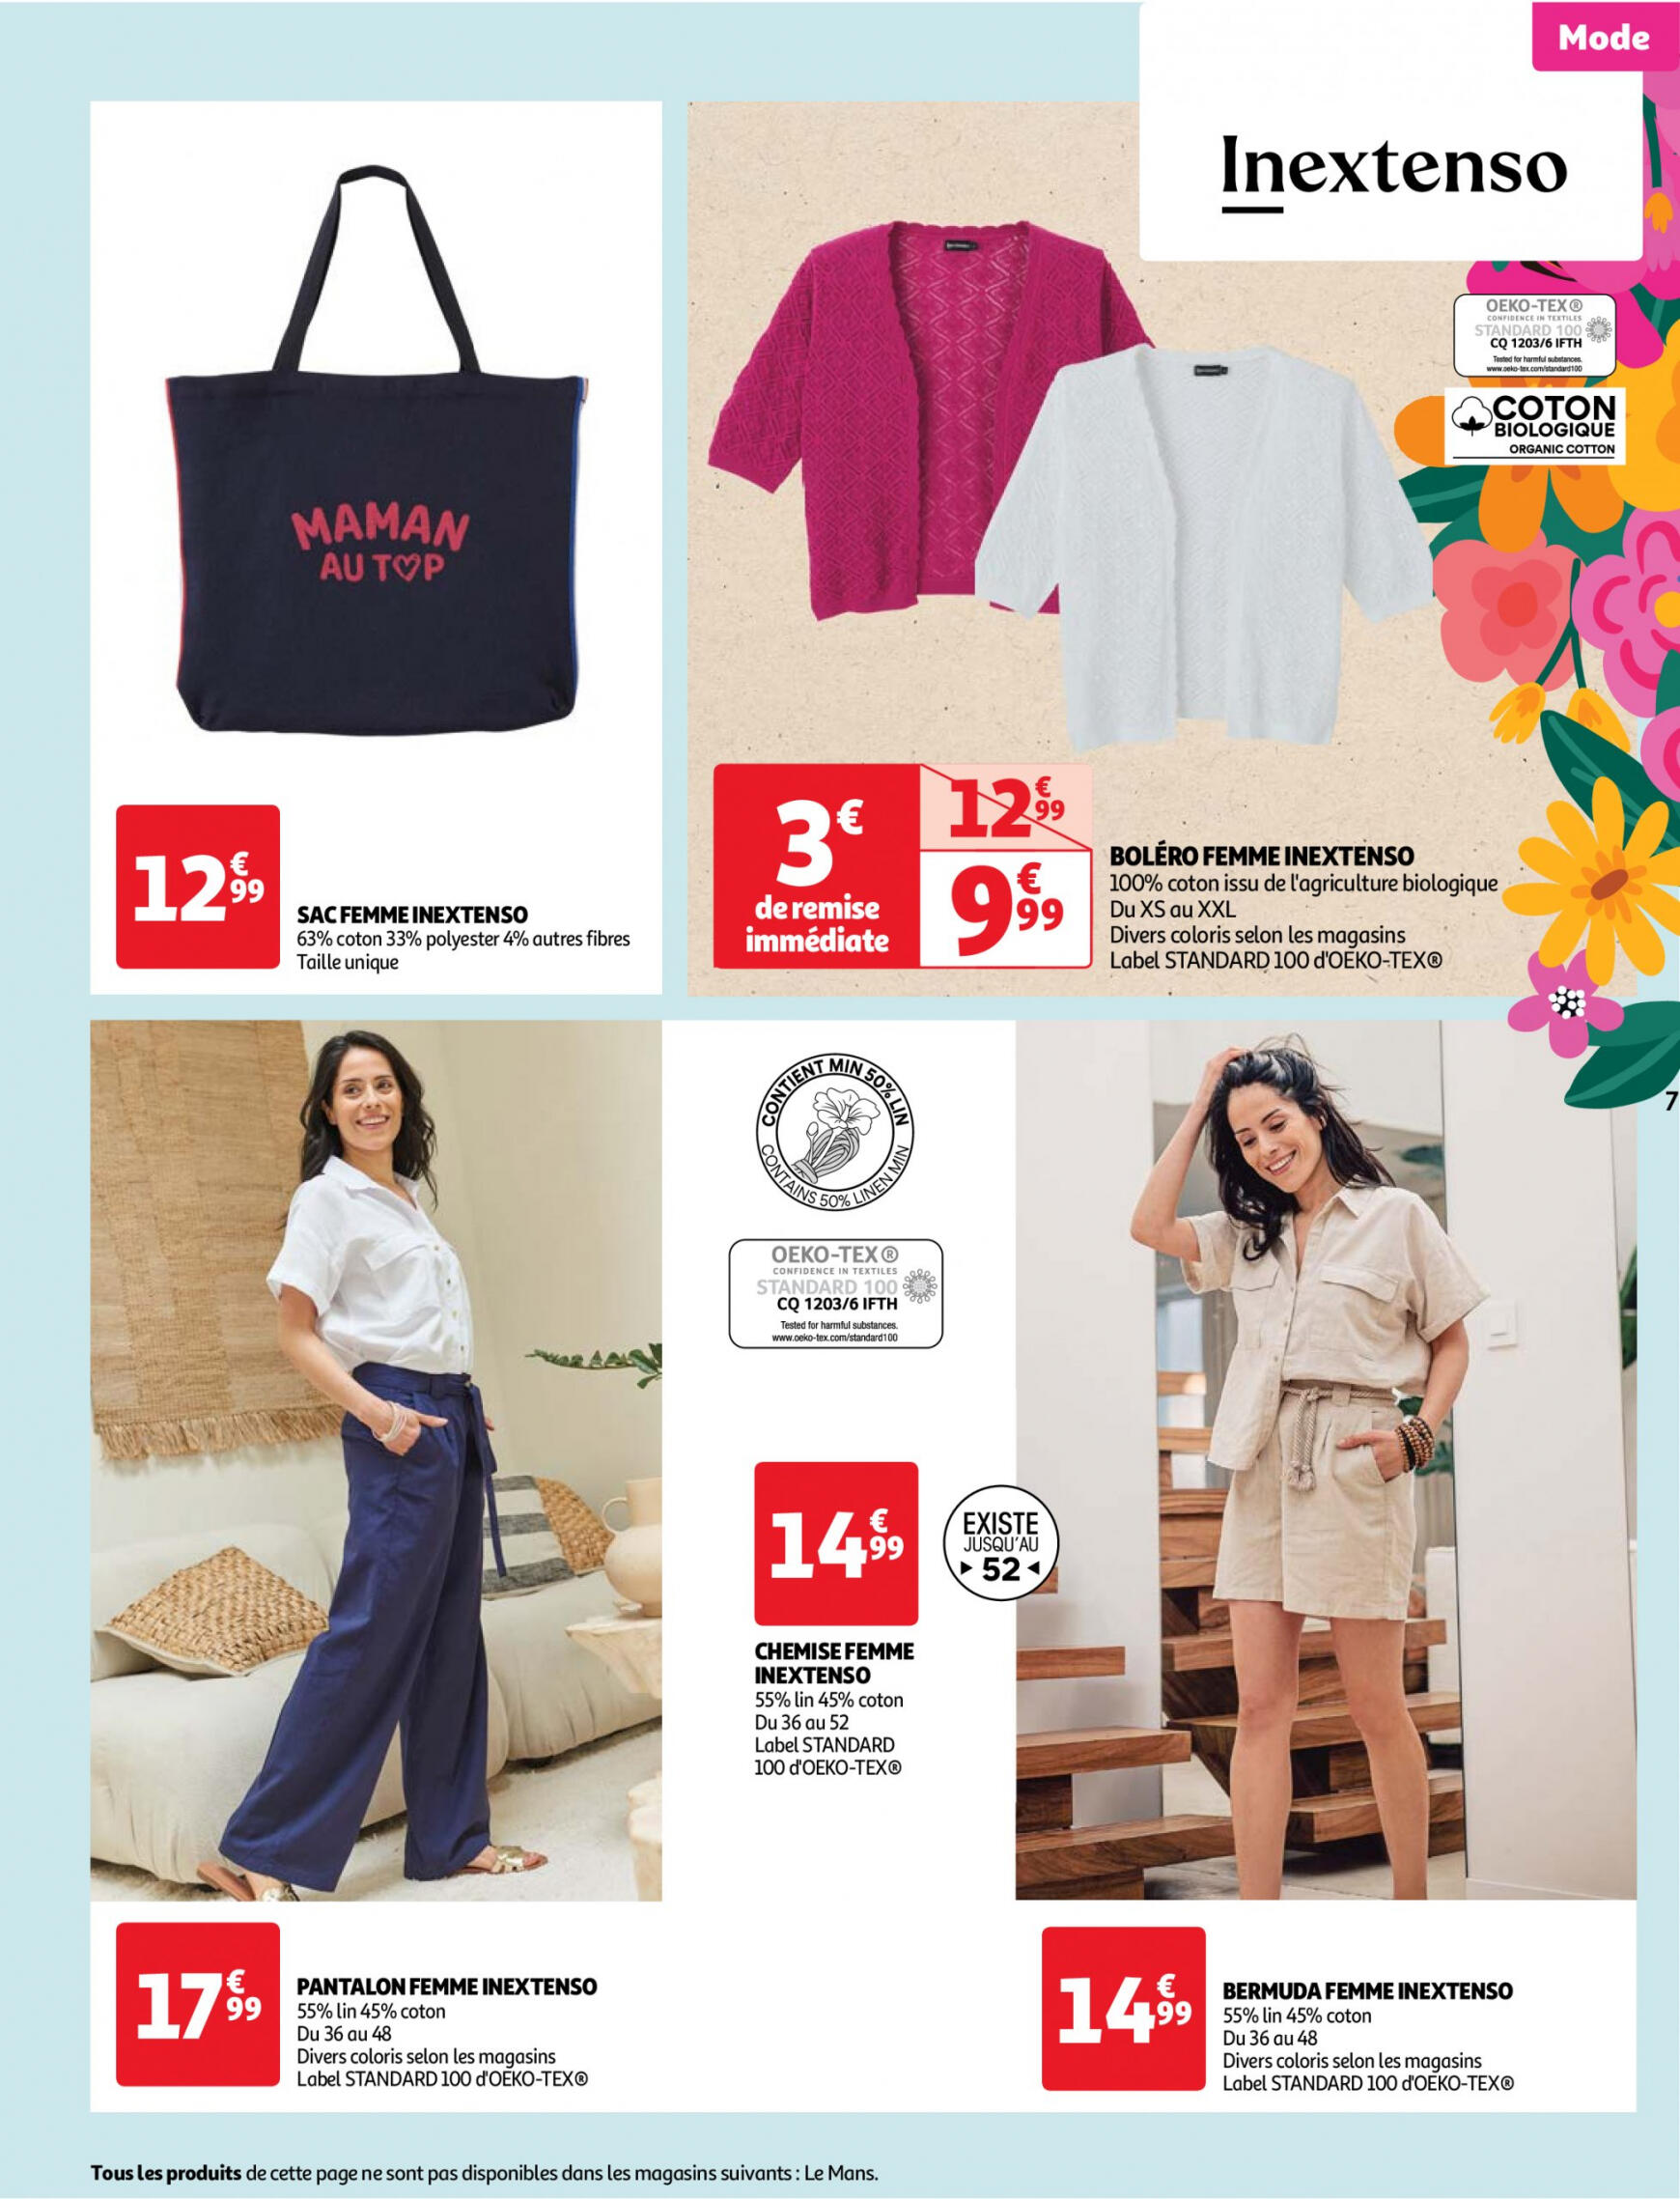 auchan - Auchan - Merci maman folder huidig 14.05. - 26.05. - page: 7